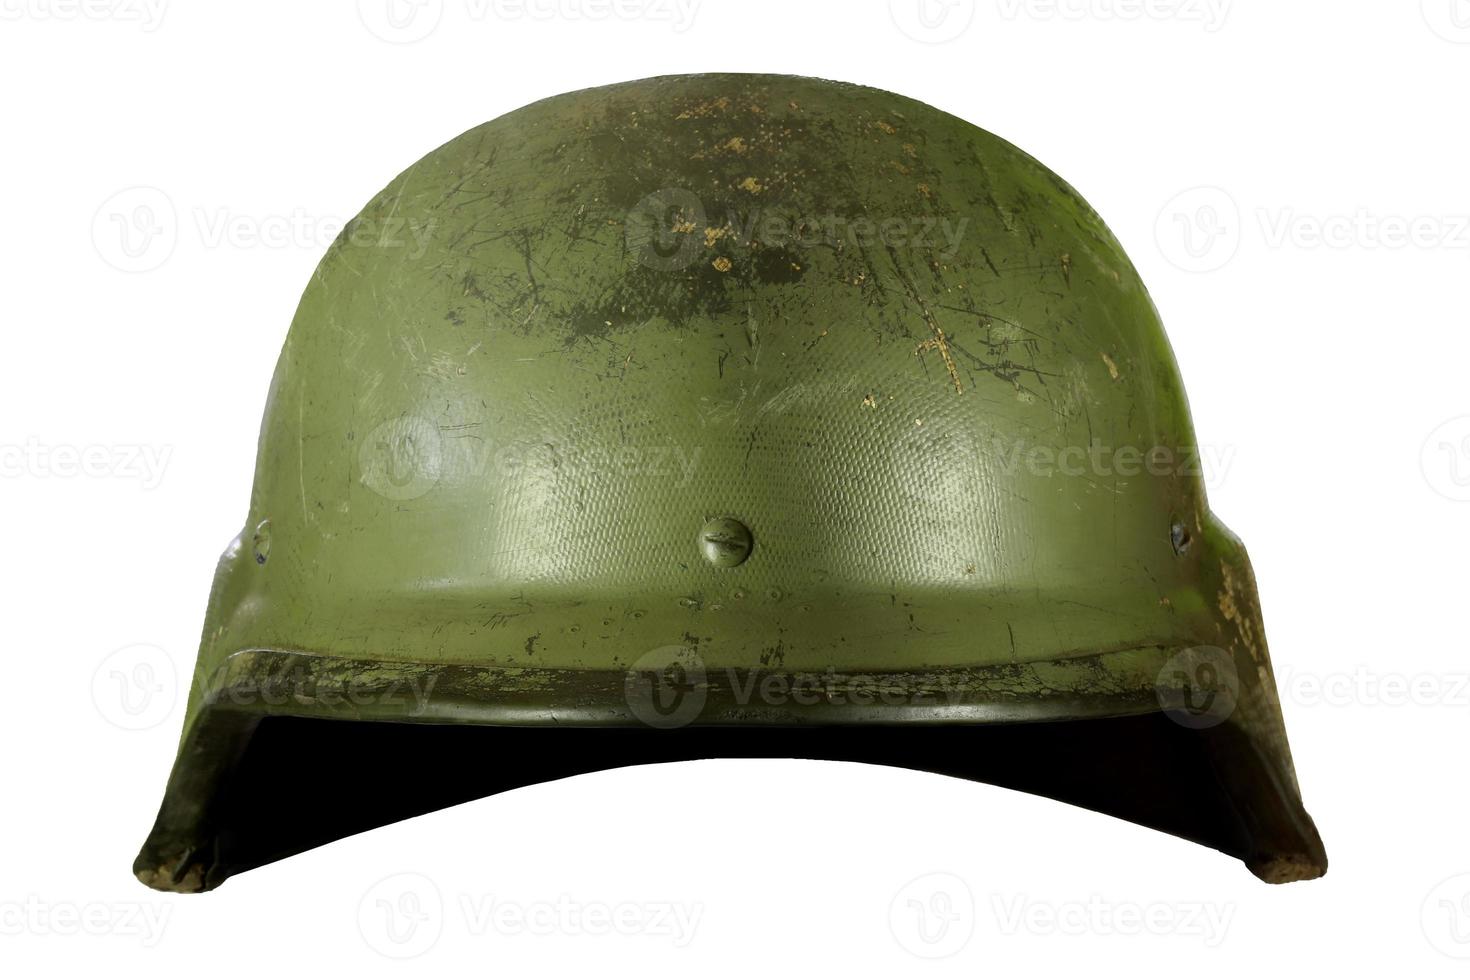 Military helmet on white background photo